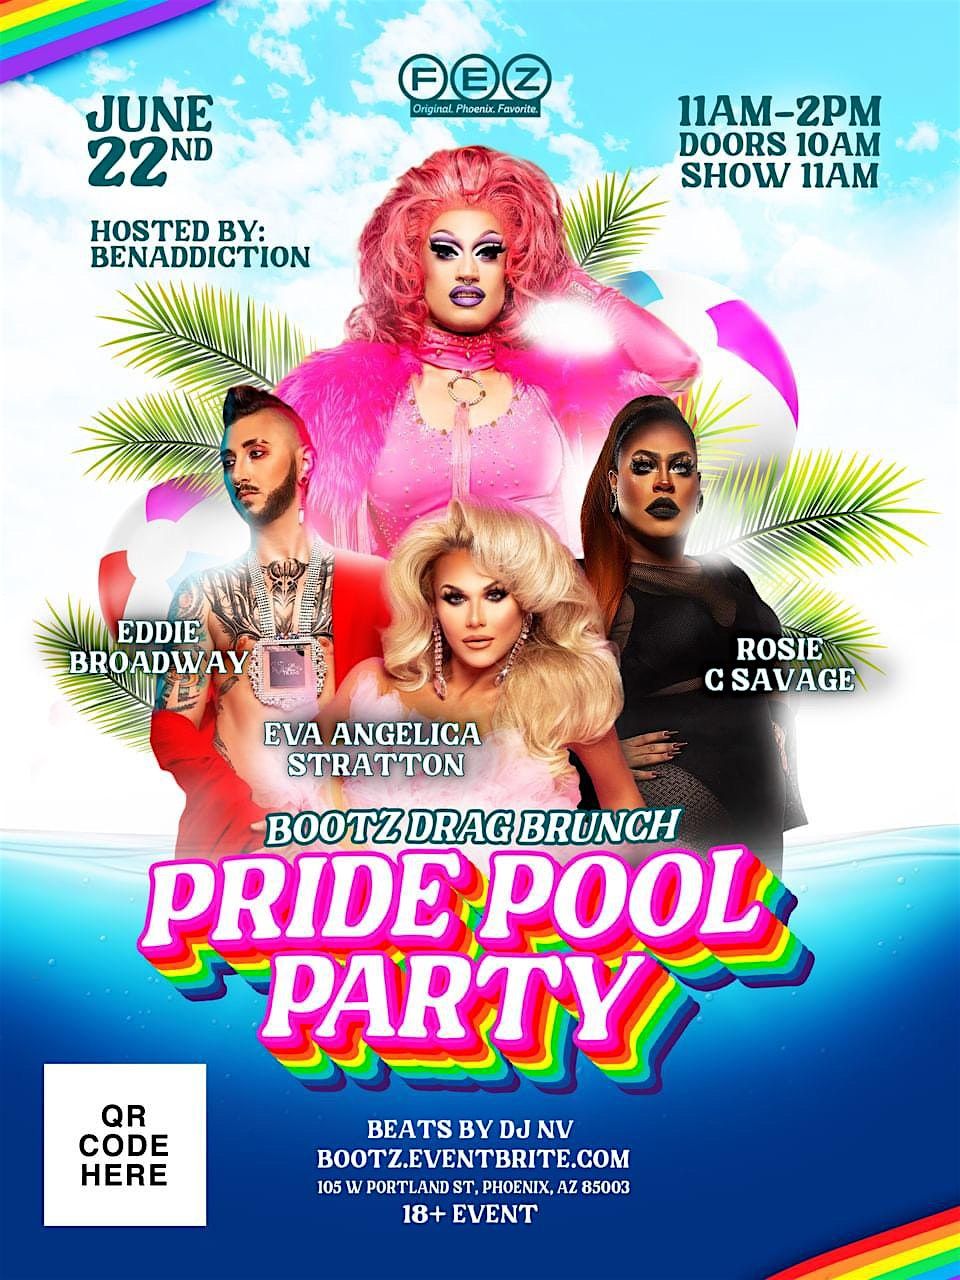 BOOTZ Drag Brunch: Pride Pool Party!